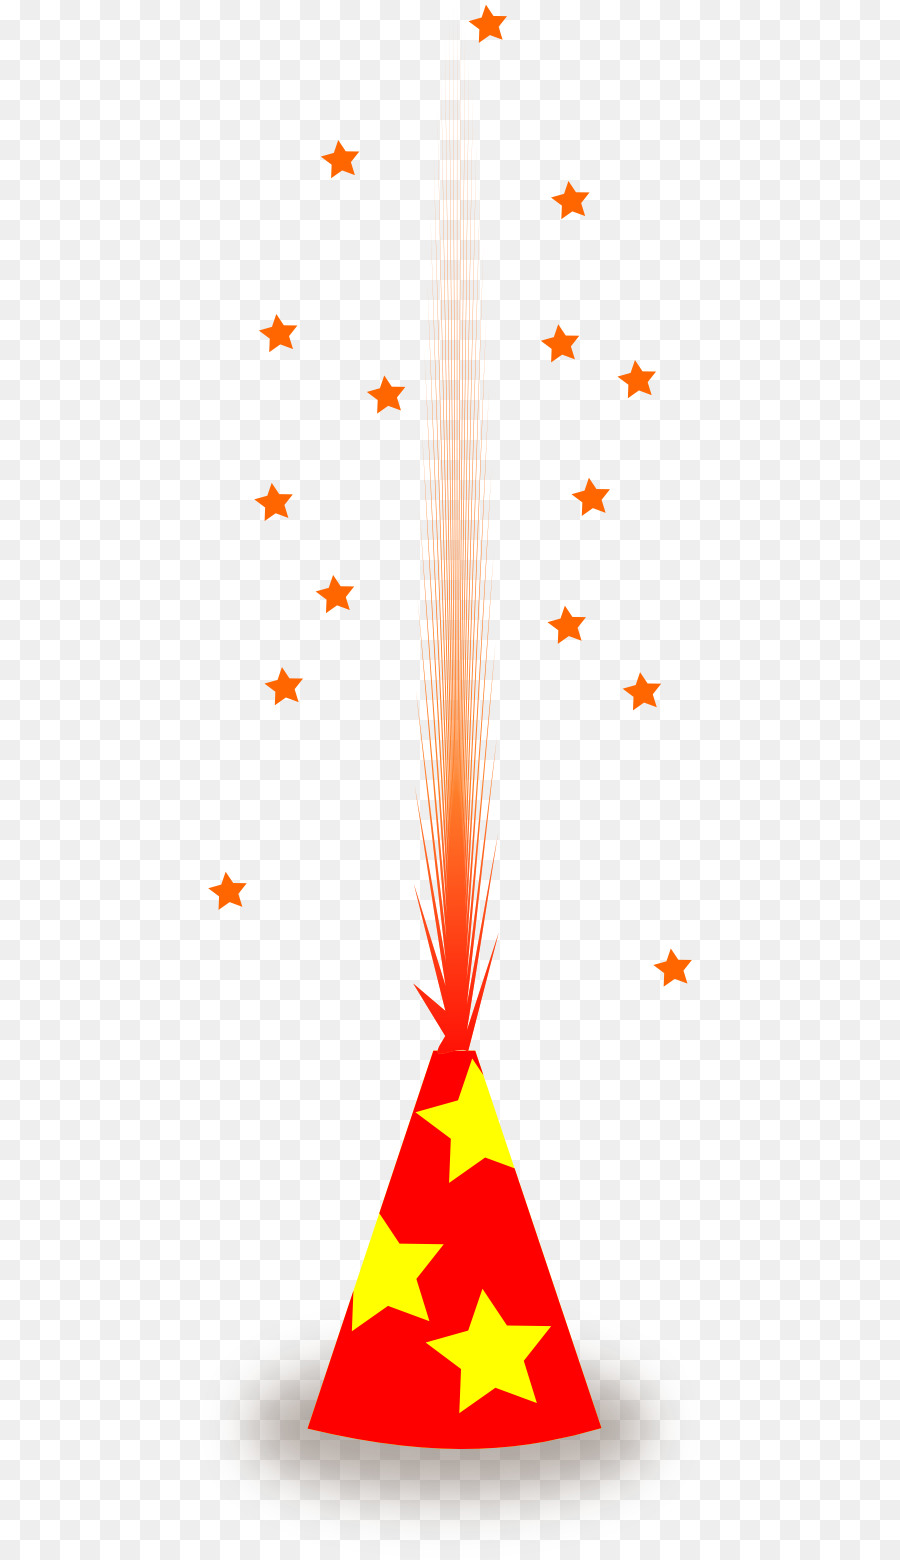 Diwali Firecracker Fireworks Clip art - Firecrackers Pictures png download - 512*1560 - Free Transparent Diwali png Download.